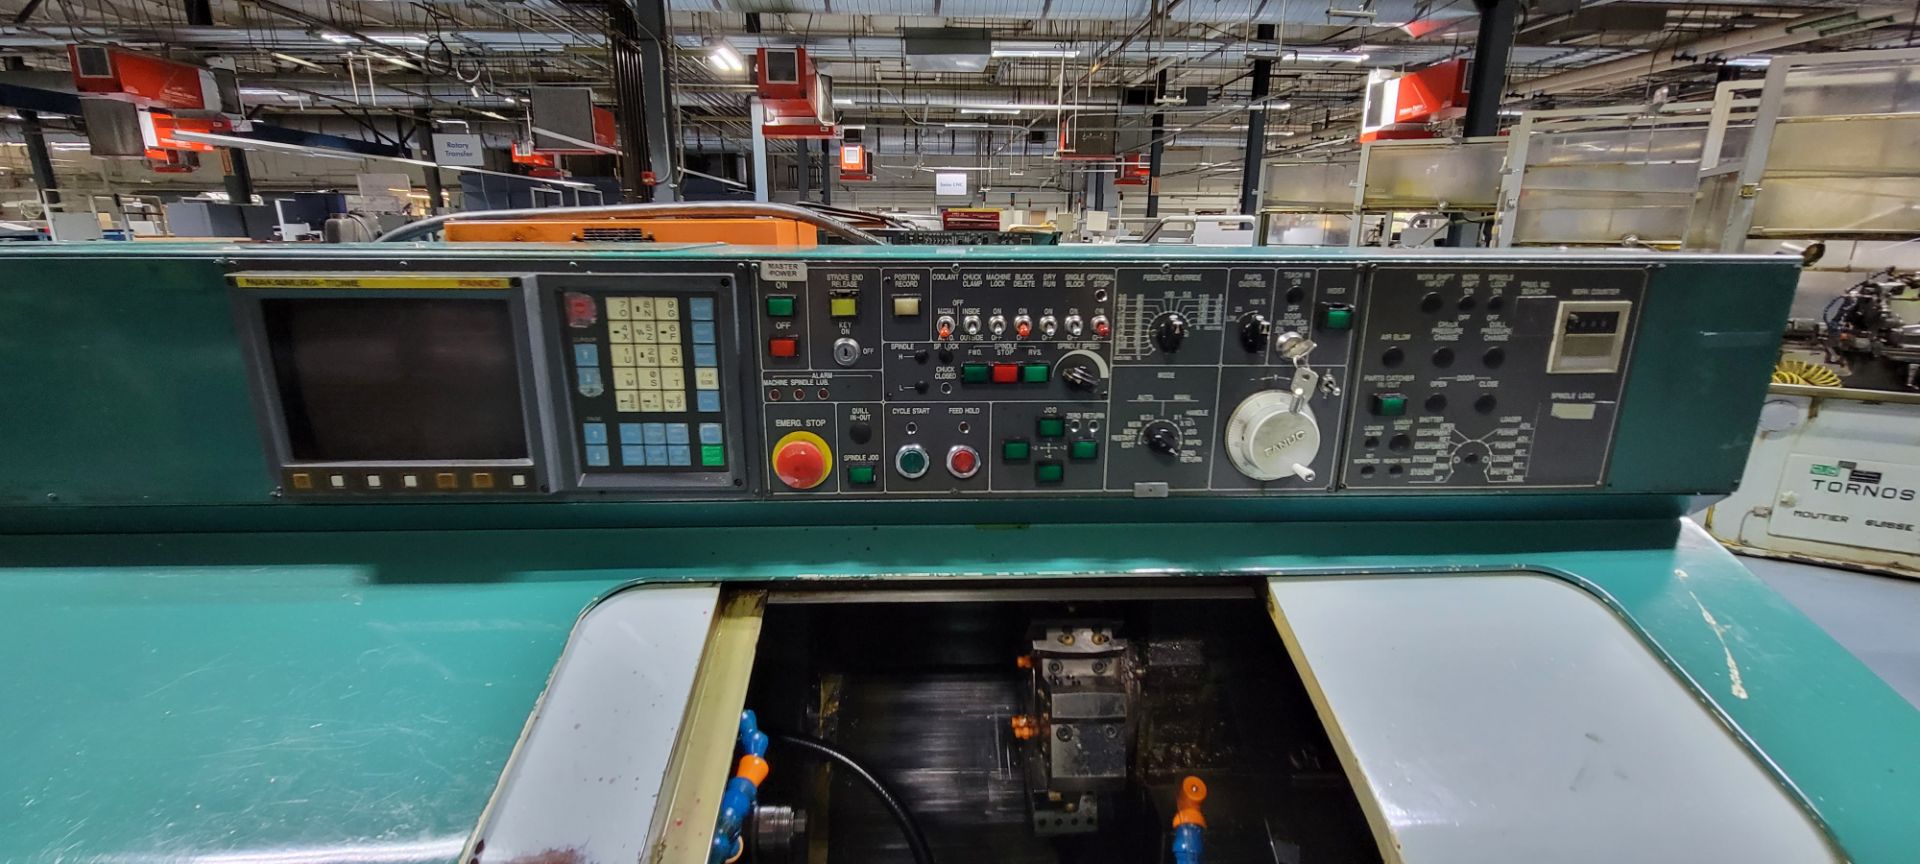 Nakamura-Tome #TMC-15 CNC Turning Center - Image 11 of 15